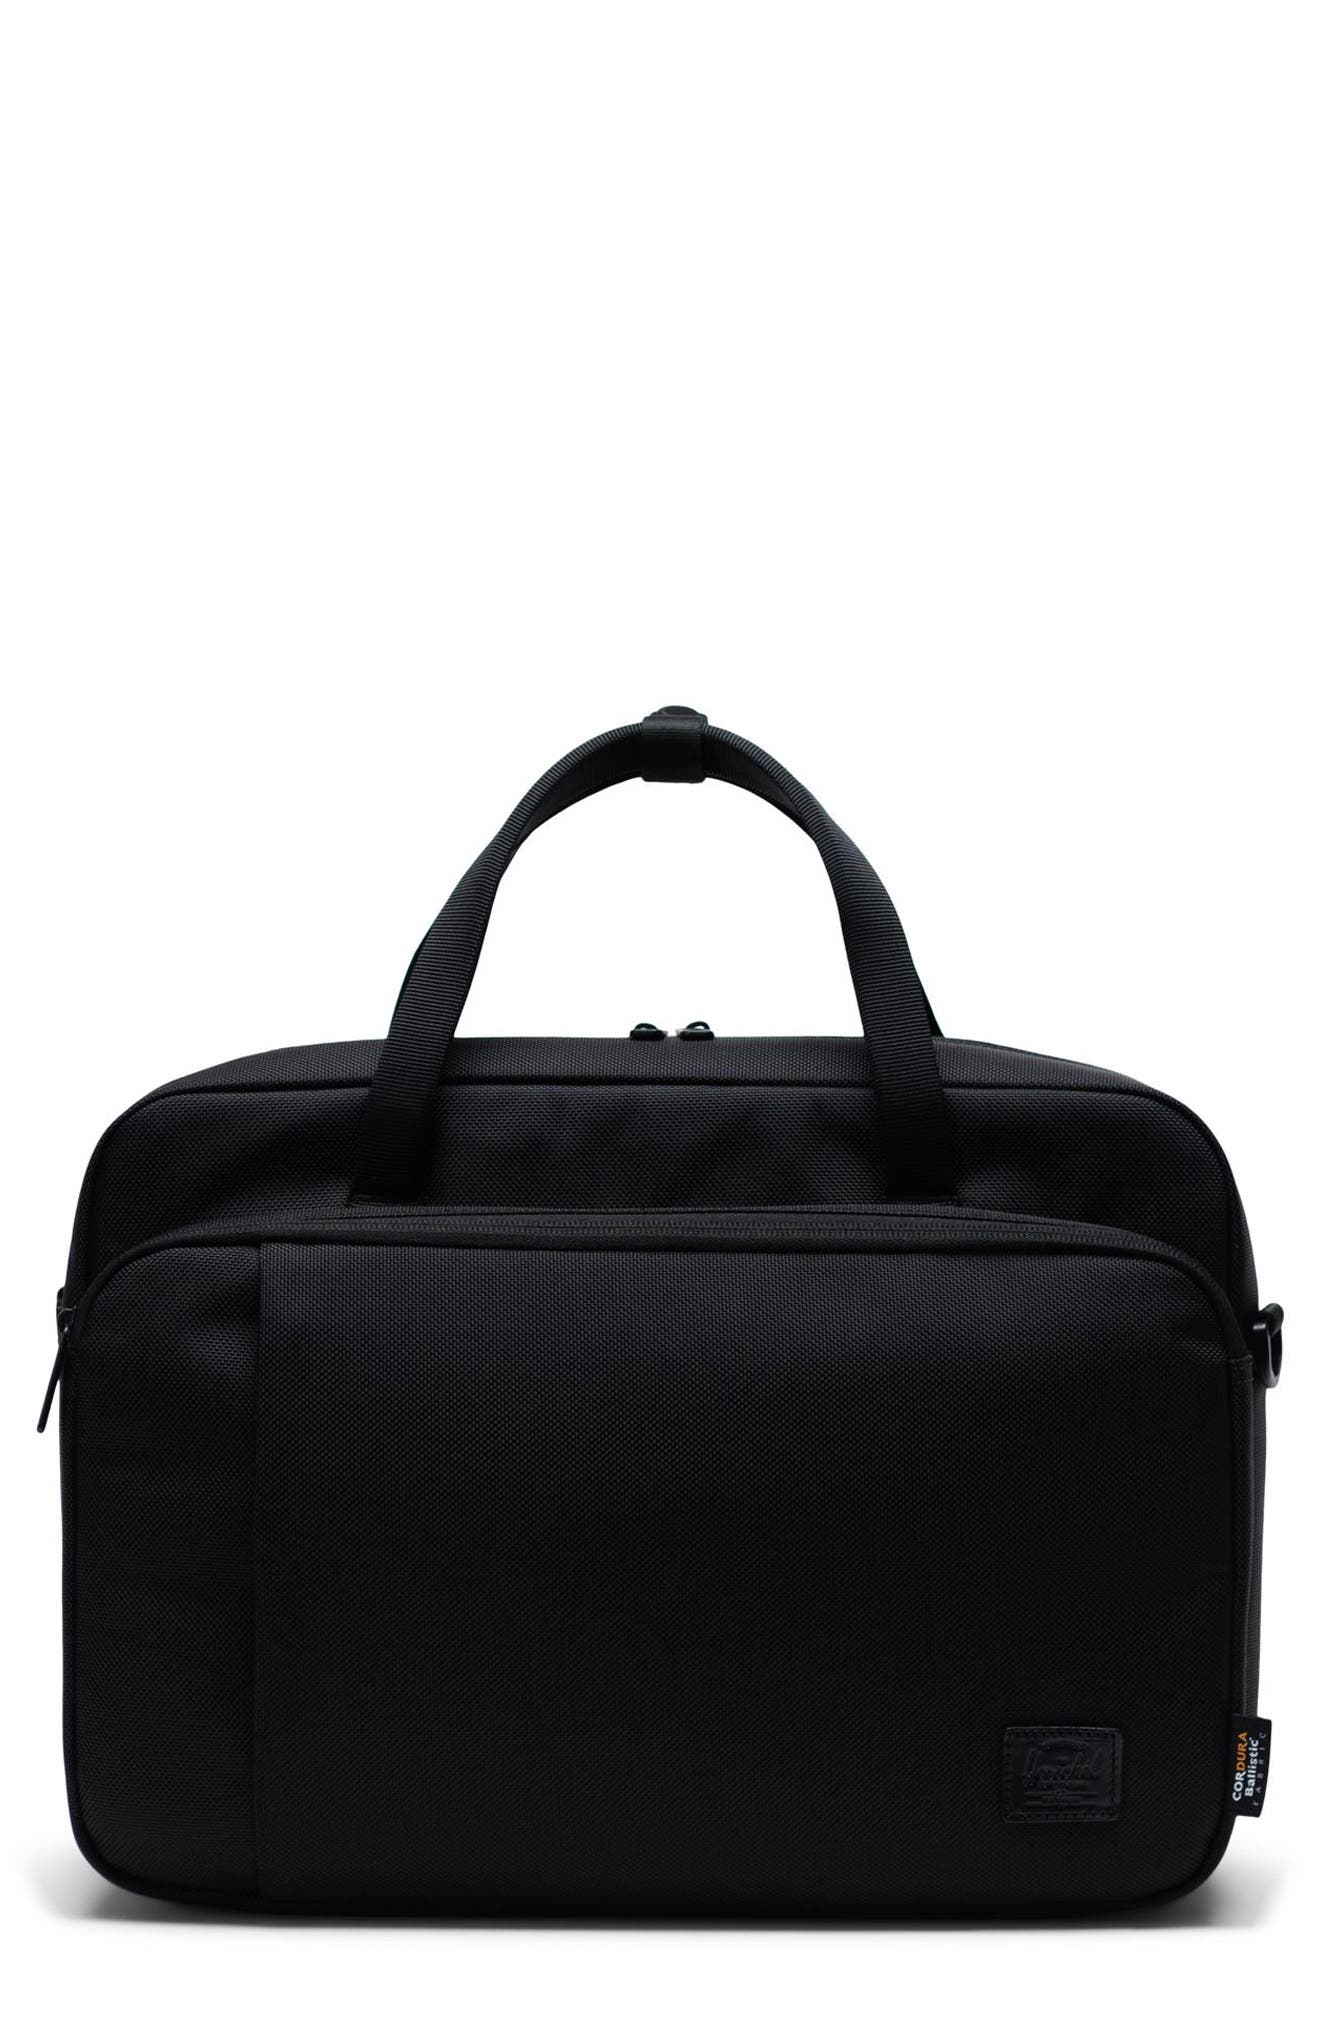 Waterproof Briefcase Briefcase Music Briefcase Bags & Purses Luggage & Travel Briefcases & Attaches Nylon Briefcase 